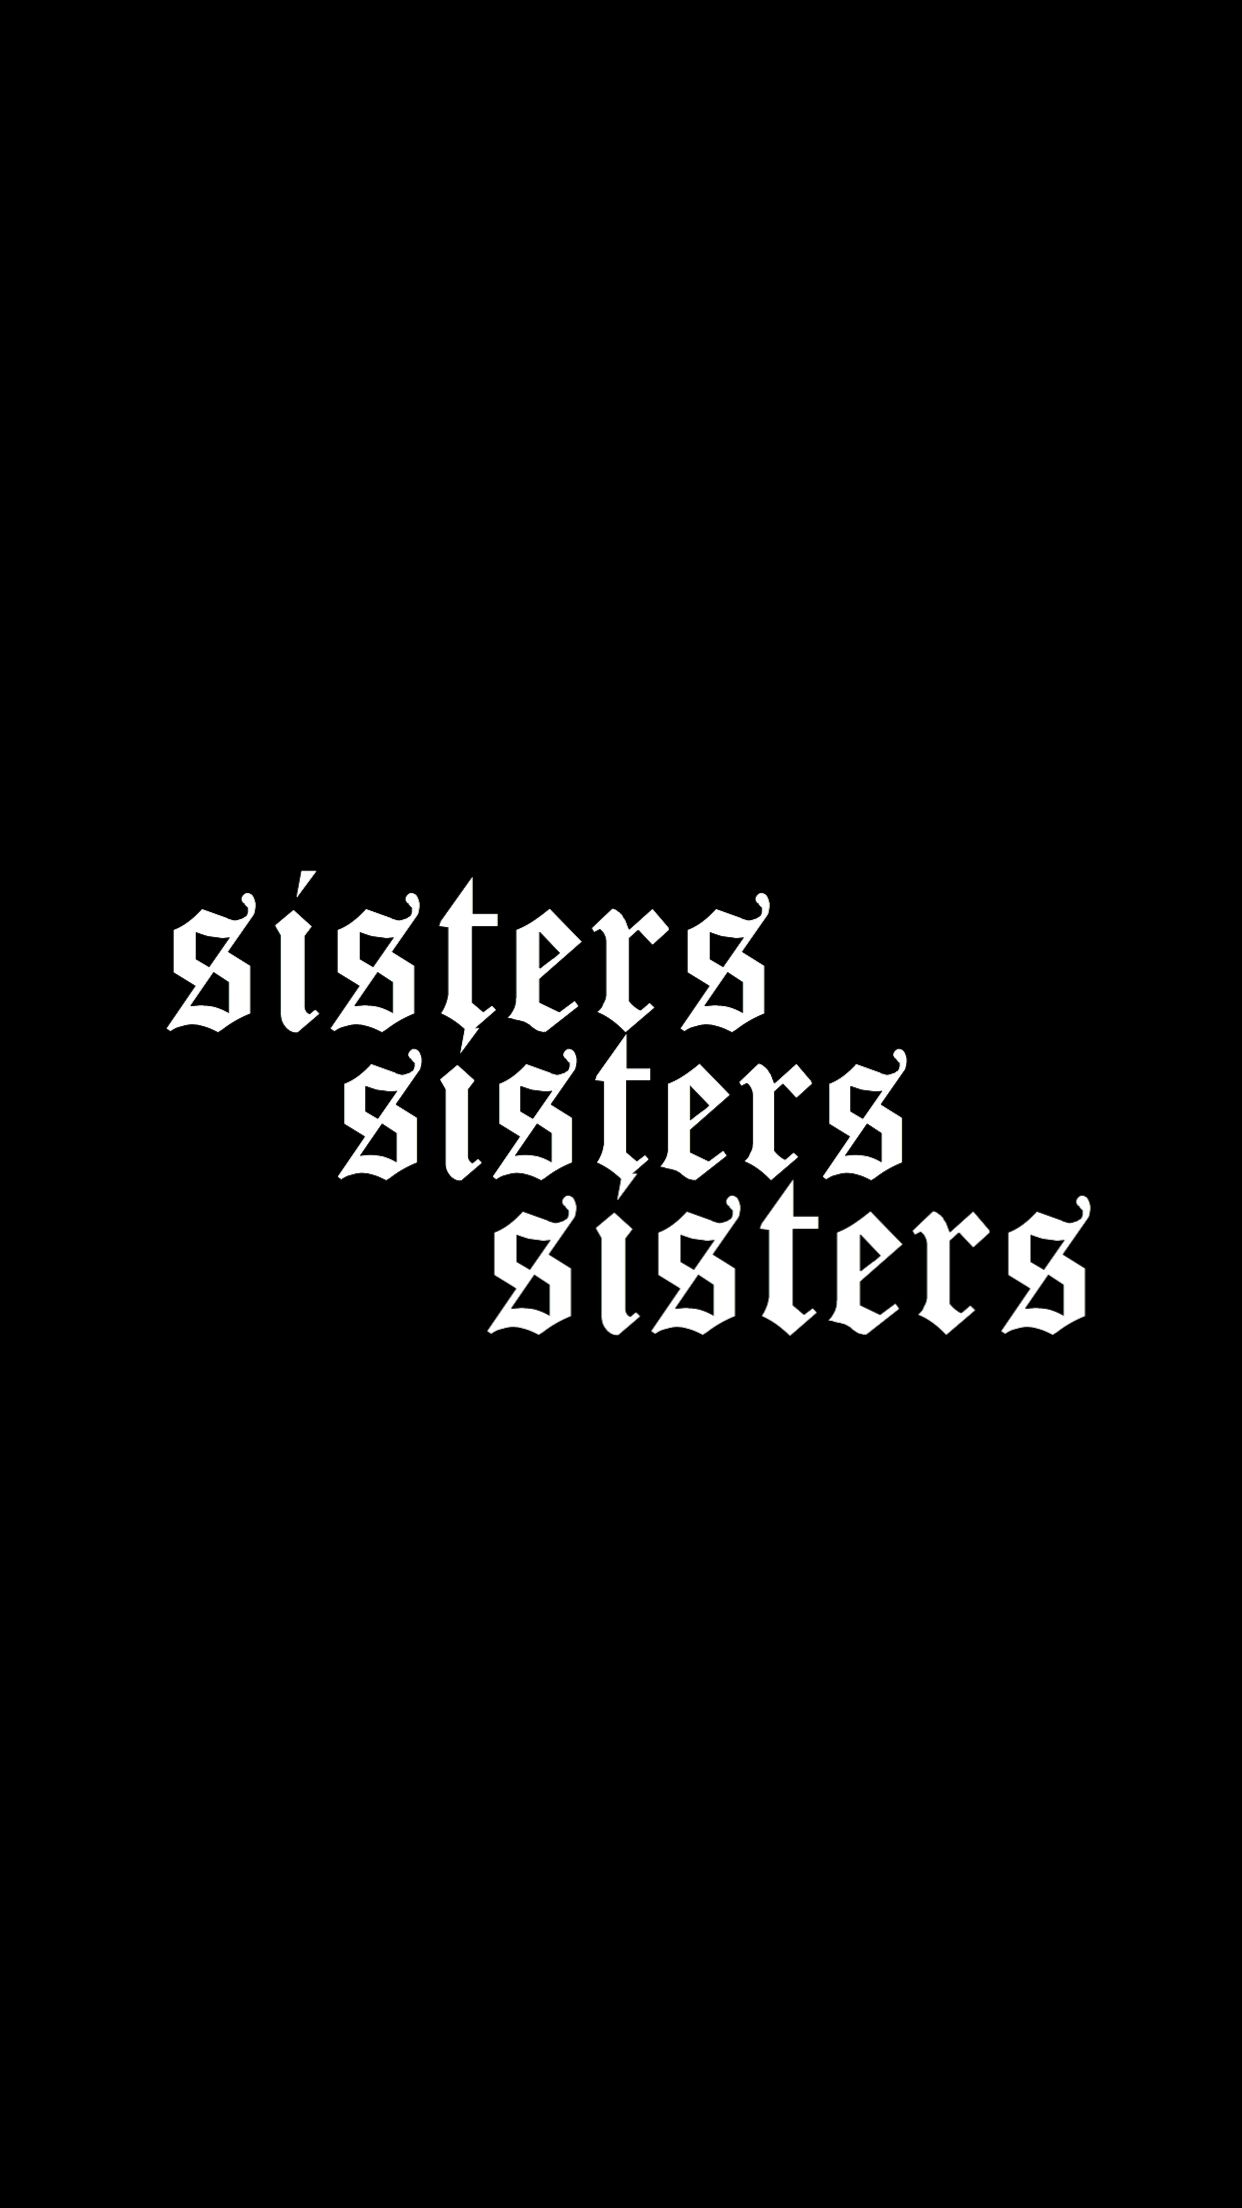 James Charles Black & White Sisters Wallpaper. Sister wallpaper, Funny wallpaper, Black and white instagram